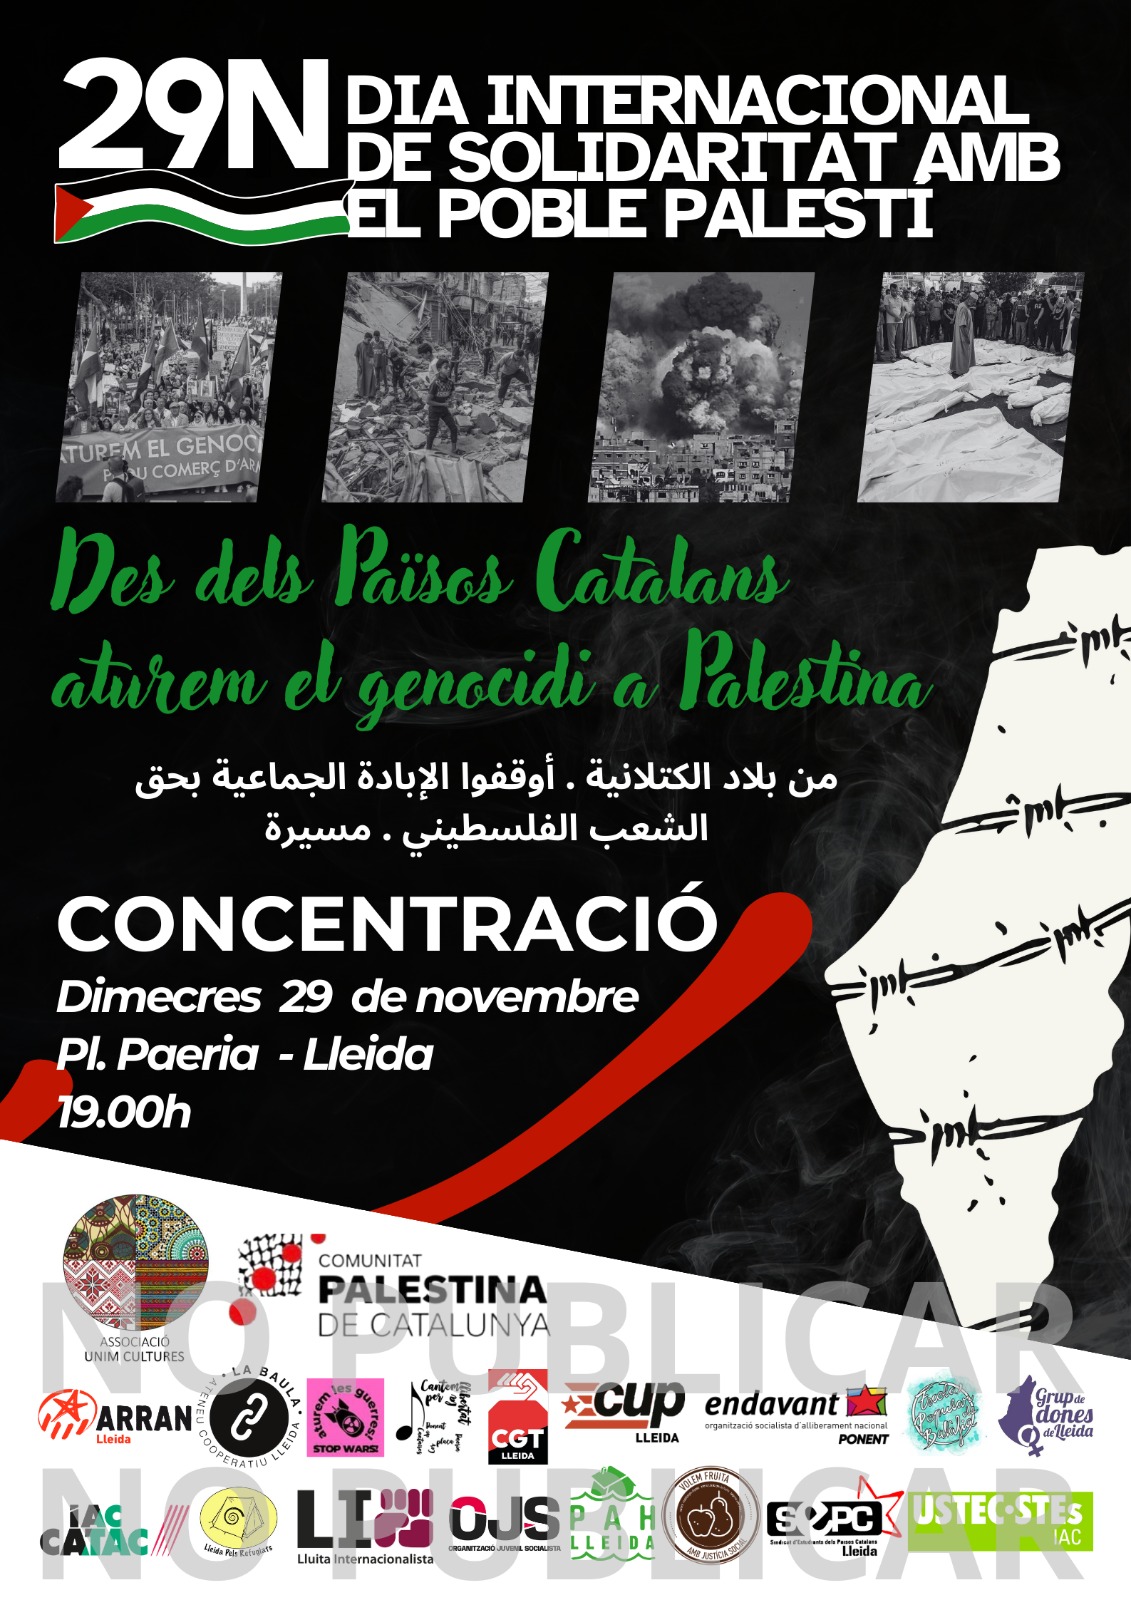 29N dia internacional amb el poble palestí